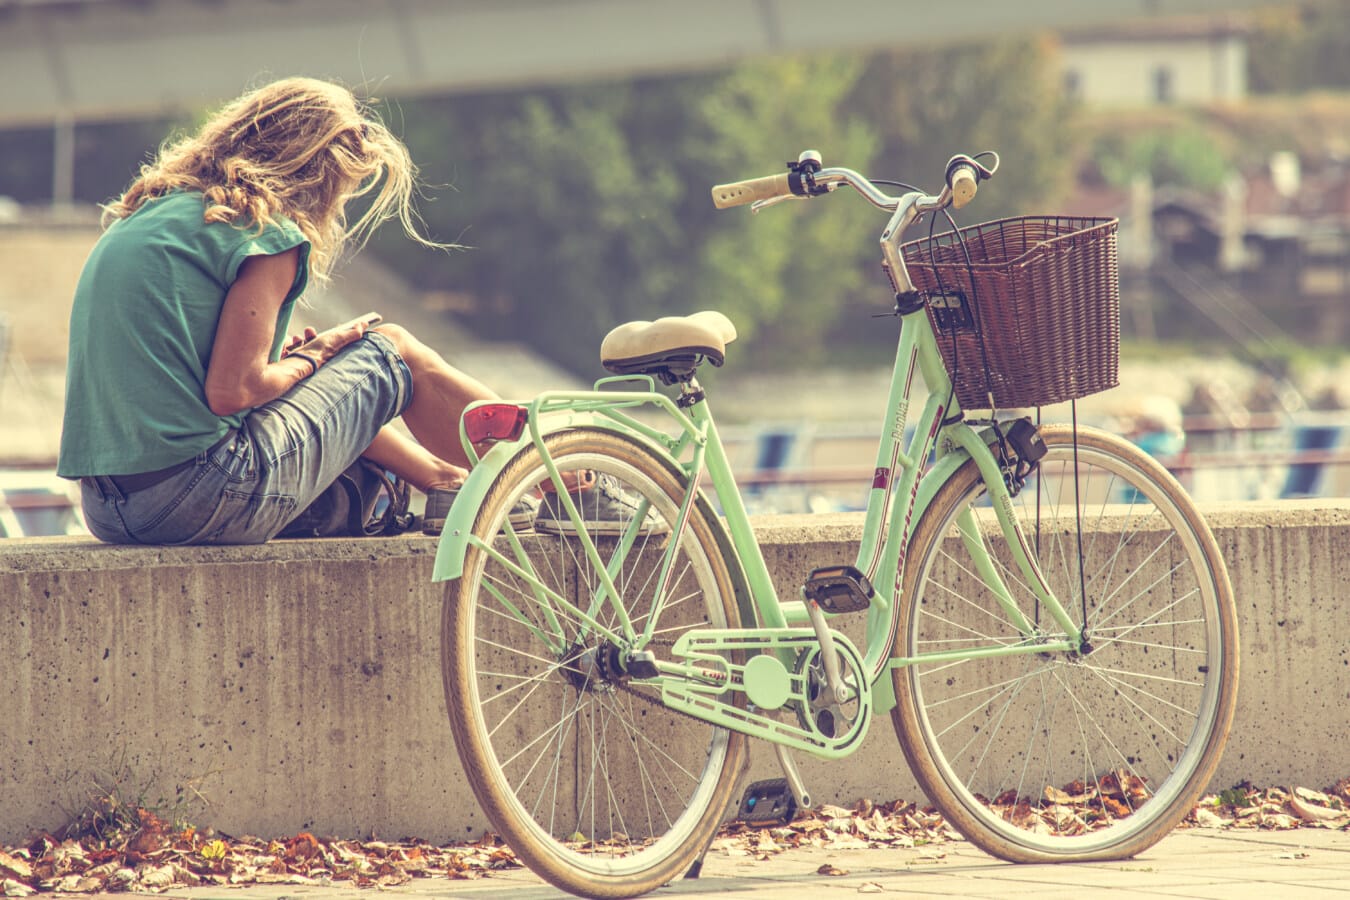 blonde, summer season, relaxing, outdoor, enjoyment, bicycle, lifestyle, vehicle, conveyance, wheel